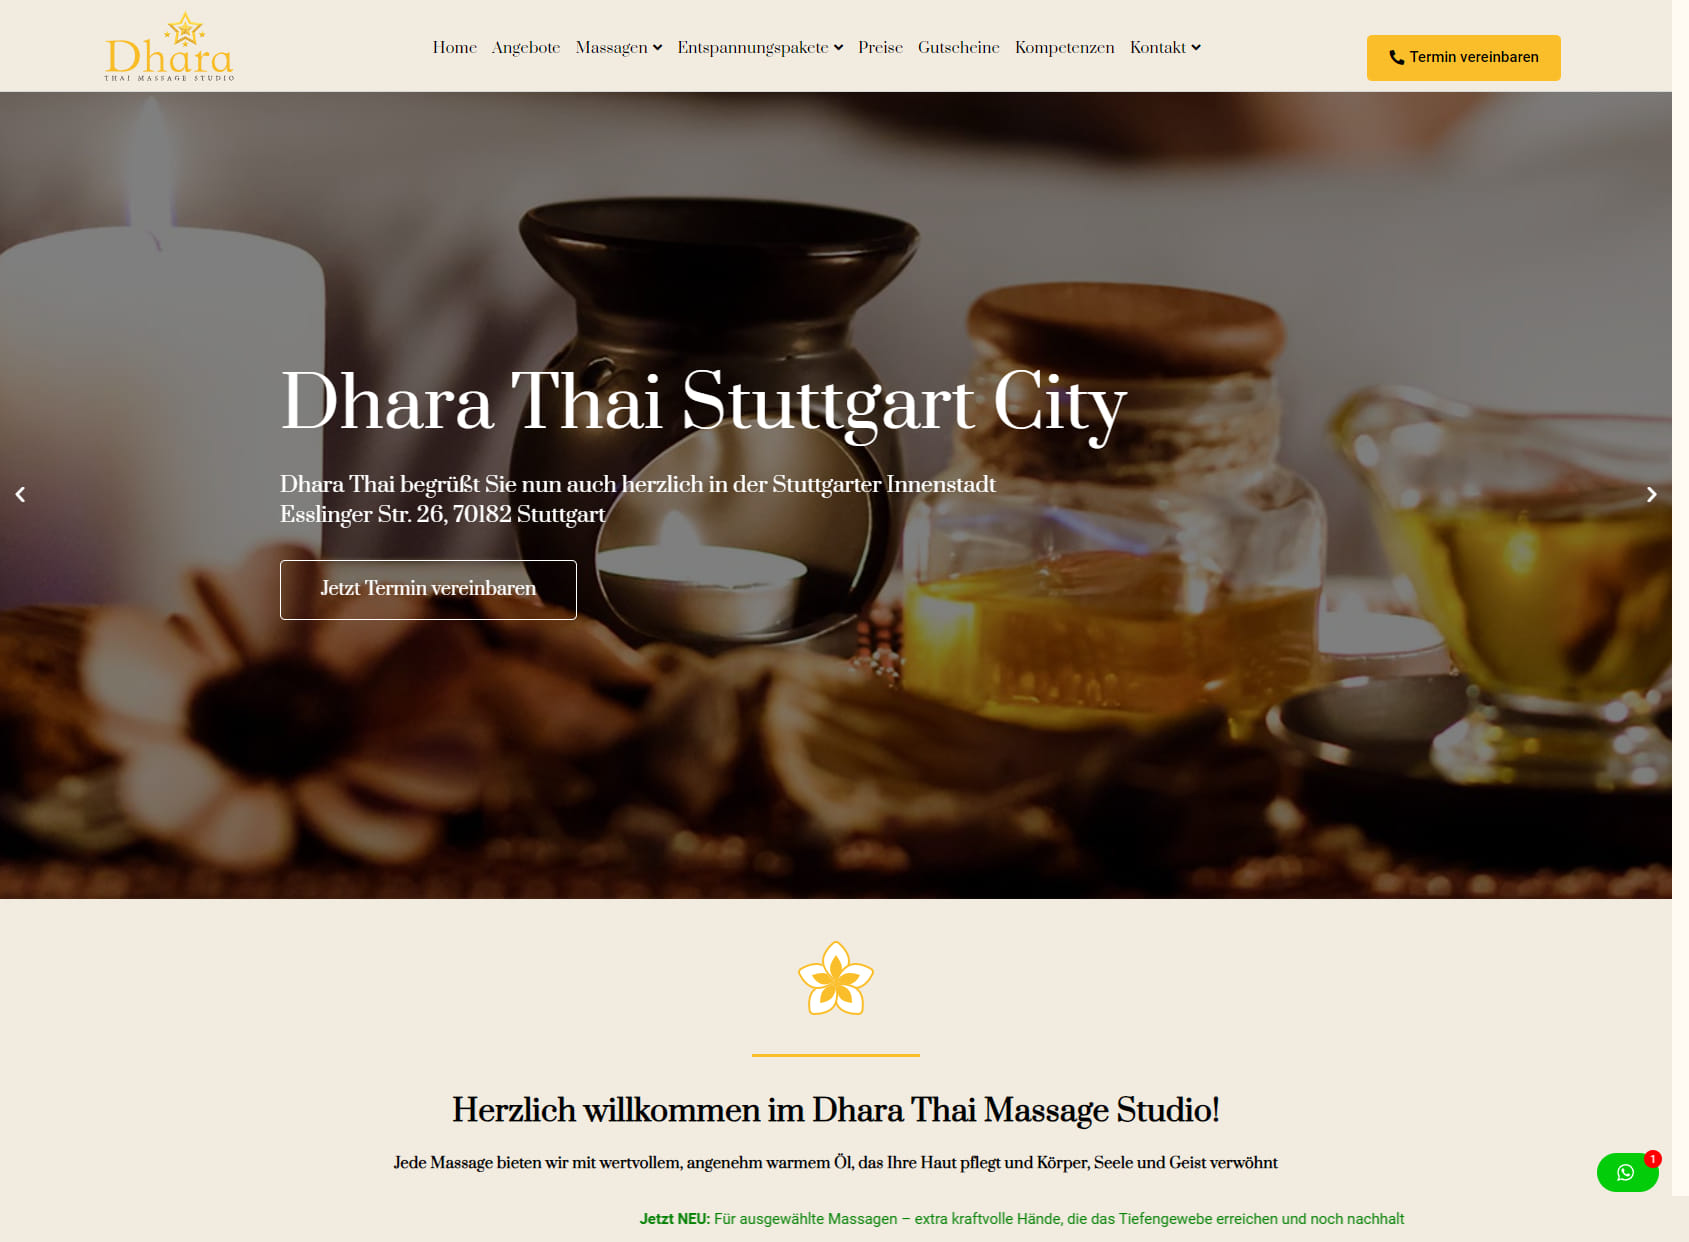 Dhara Thai Massage Studio Stuttgart